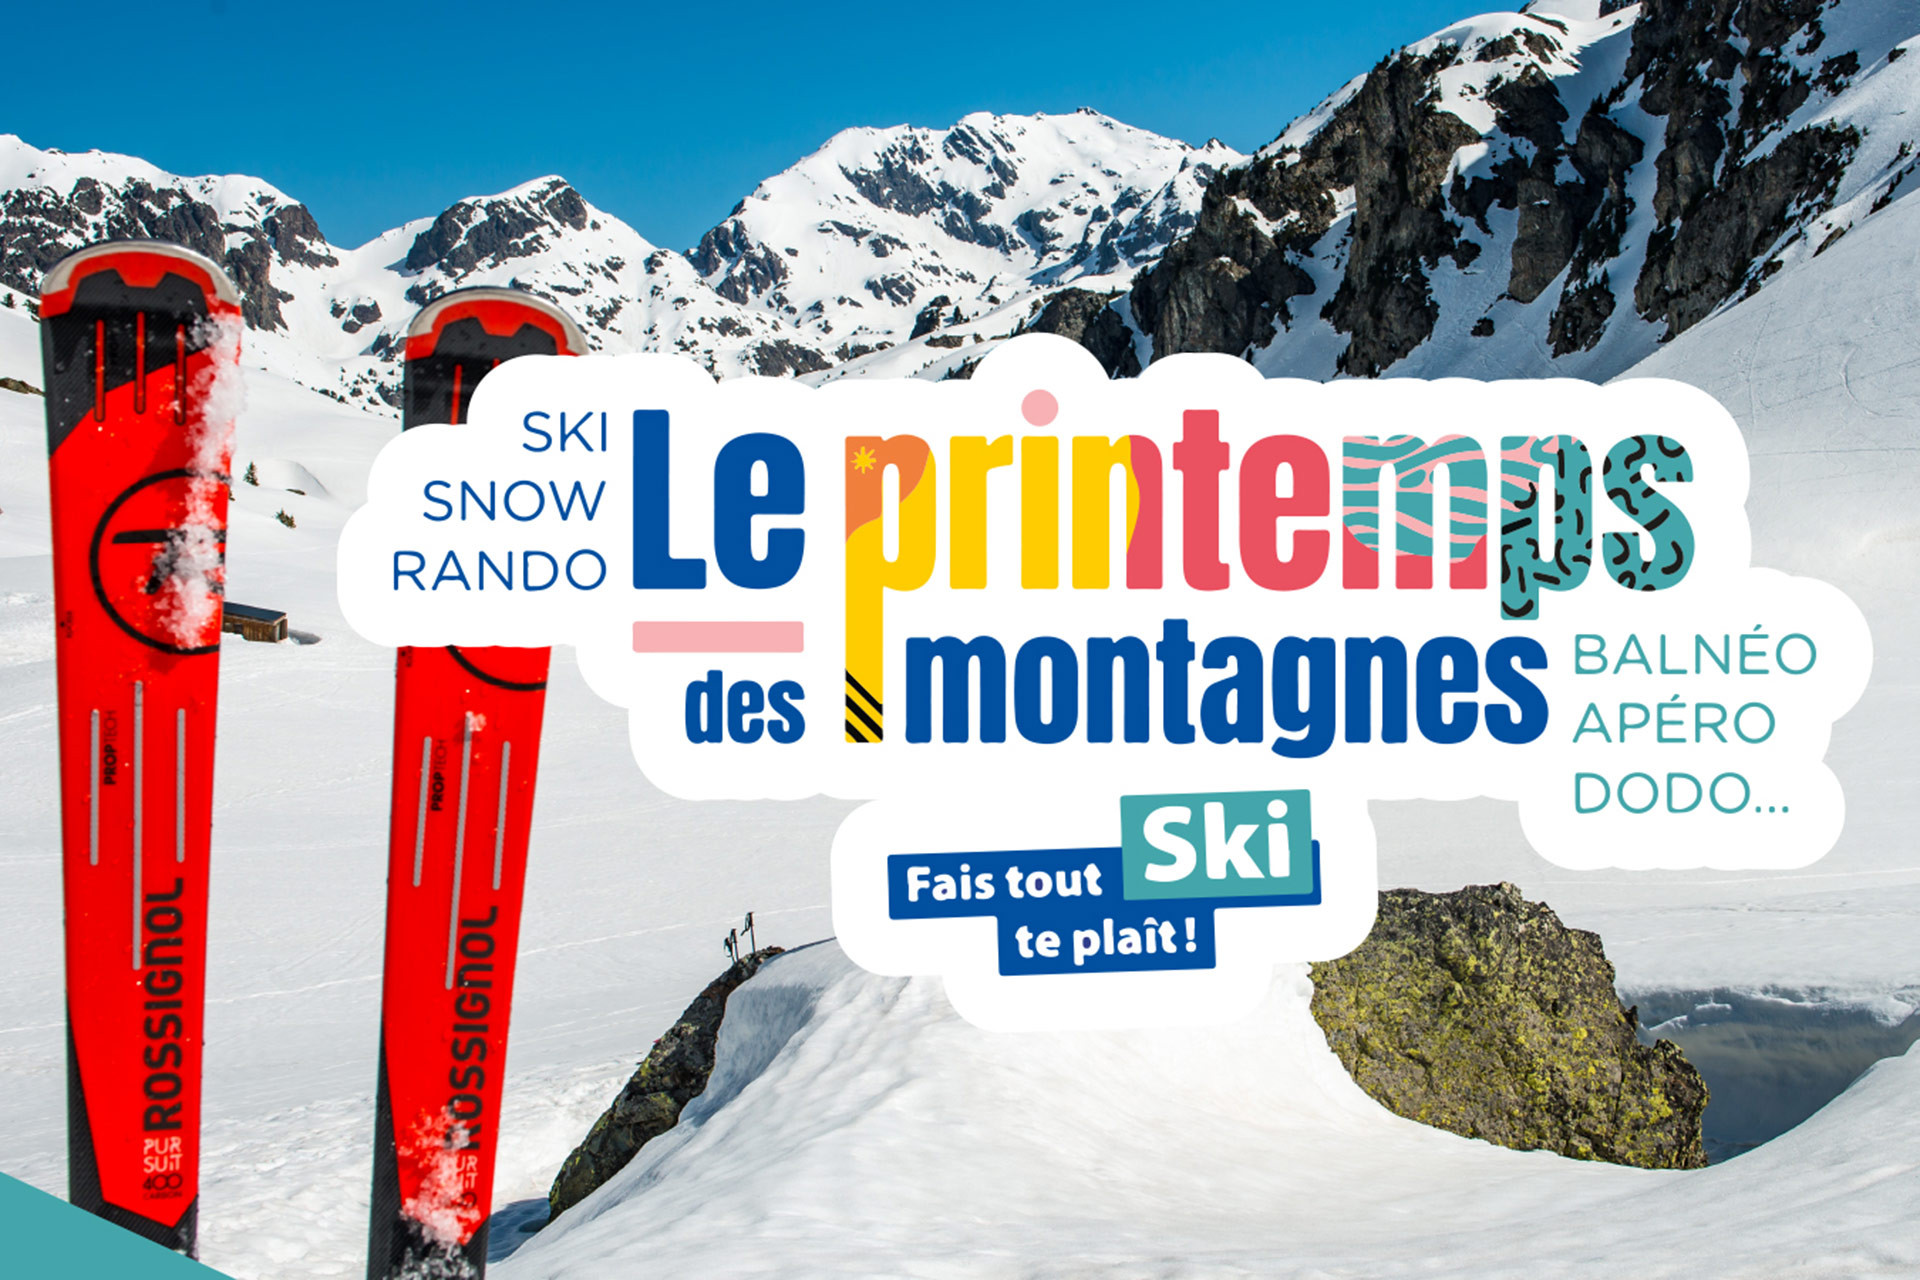 Chamrousse hébergement printemps ski montagnes station grenoble isère alpes france